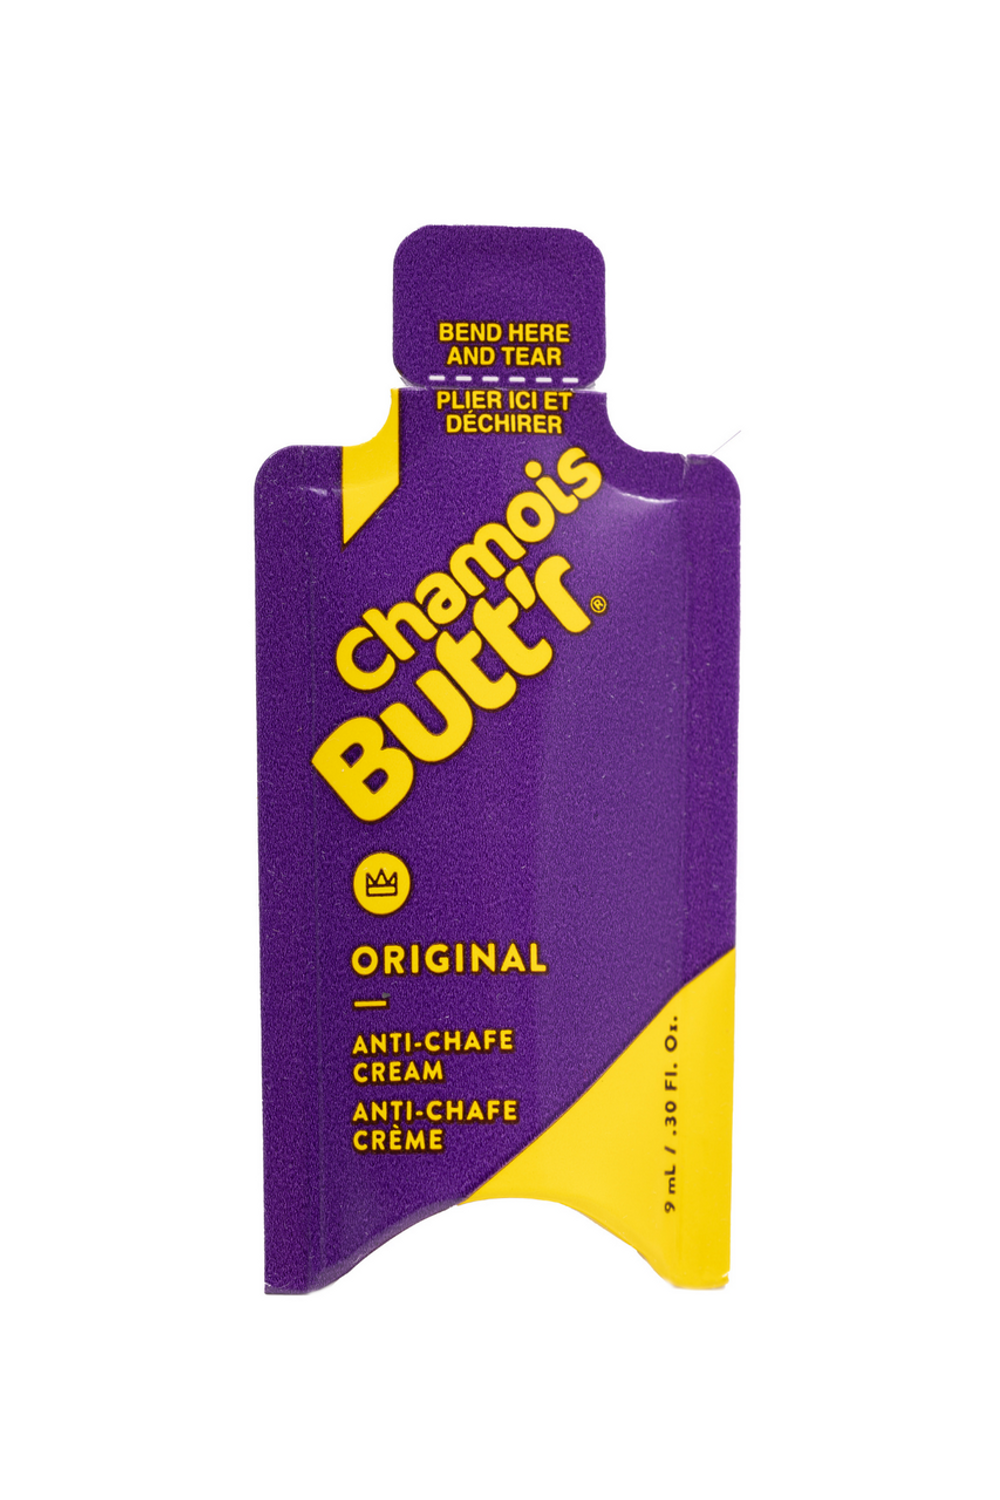 Chamois Butt'r Original: 0.3oz Packet Single